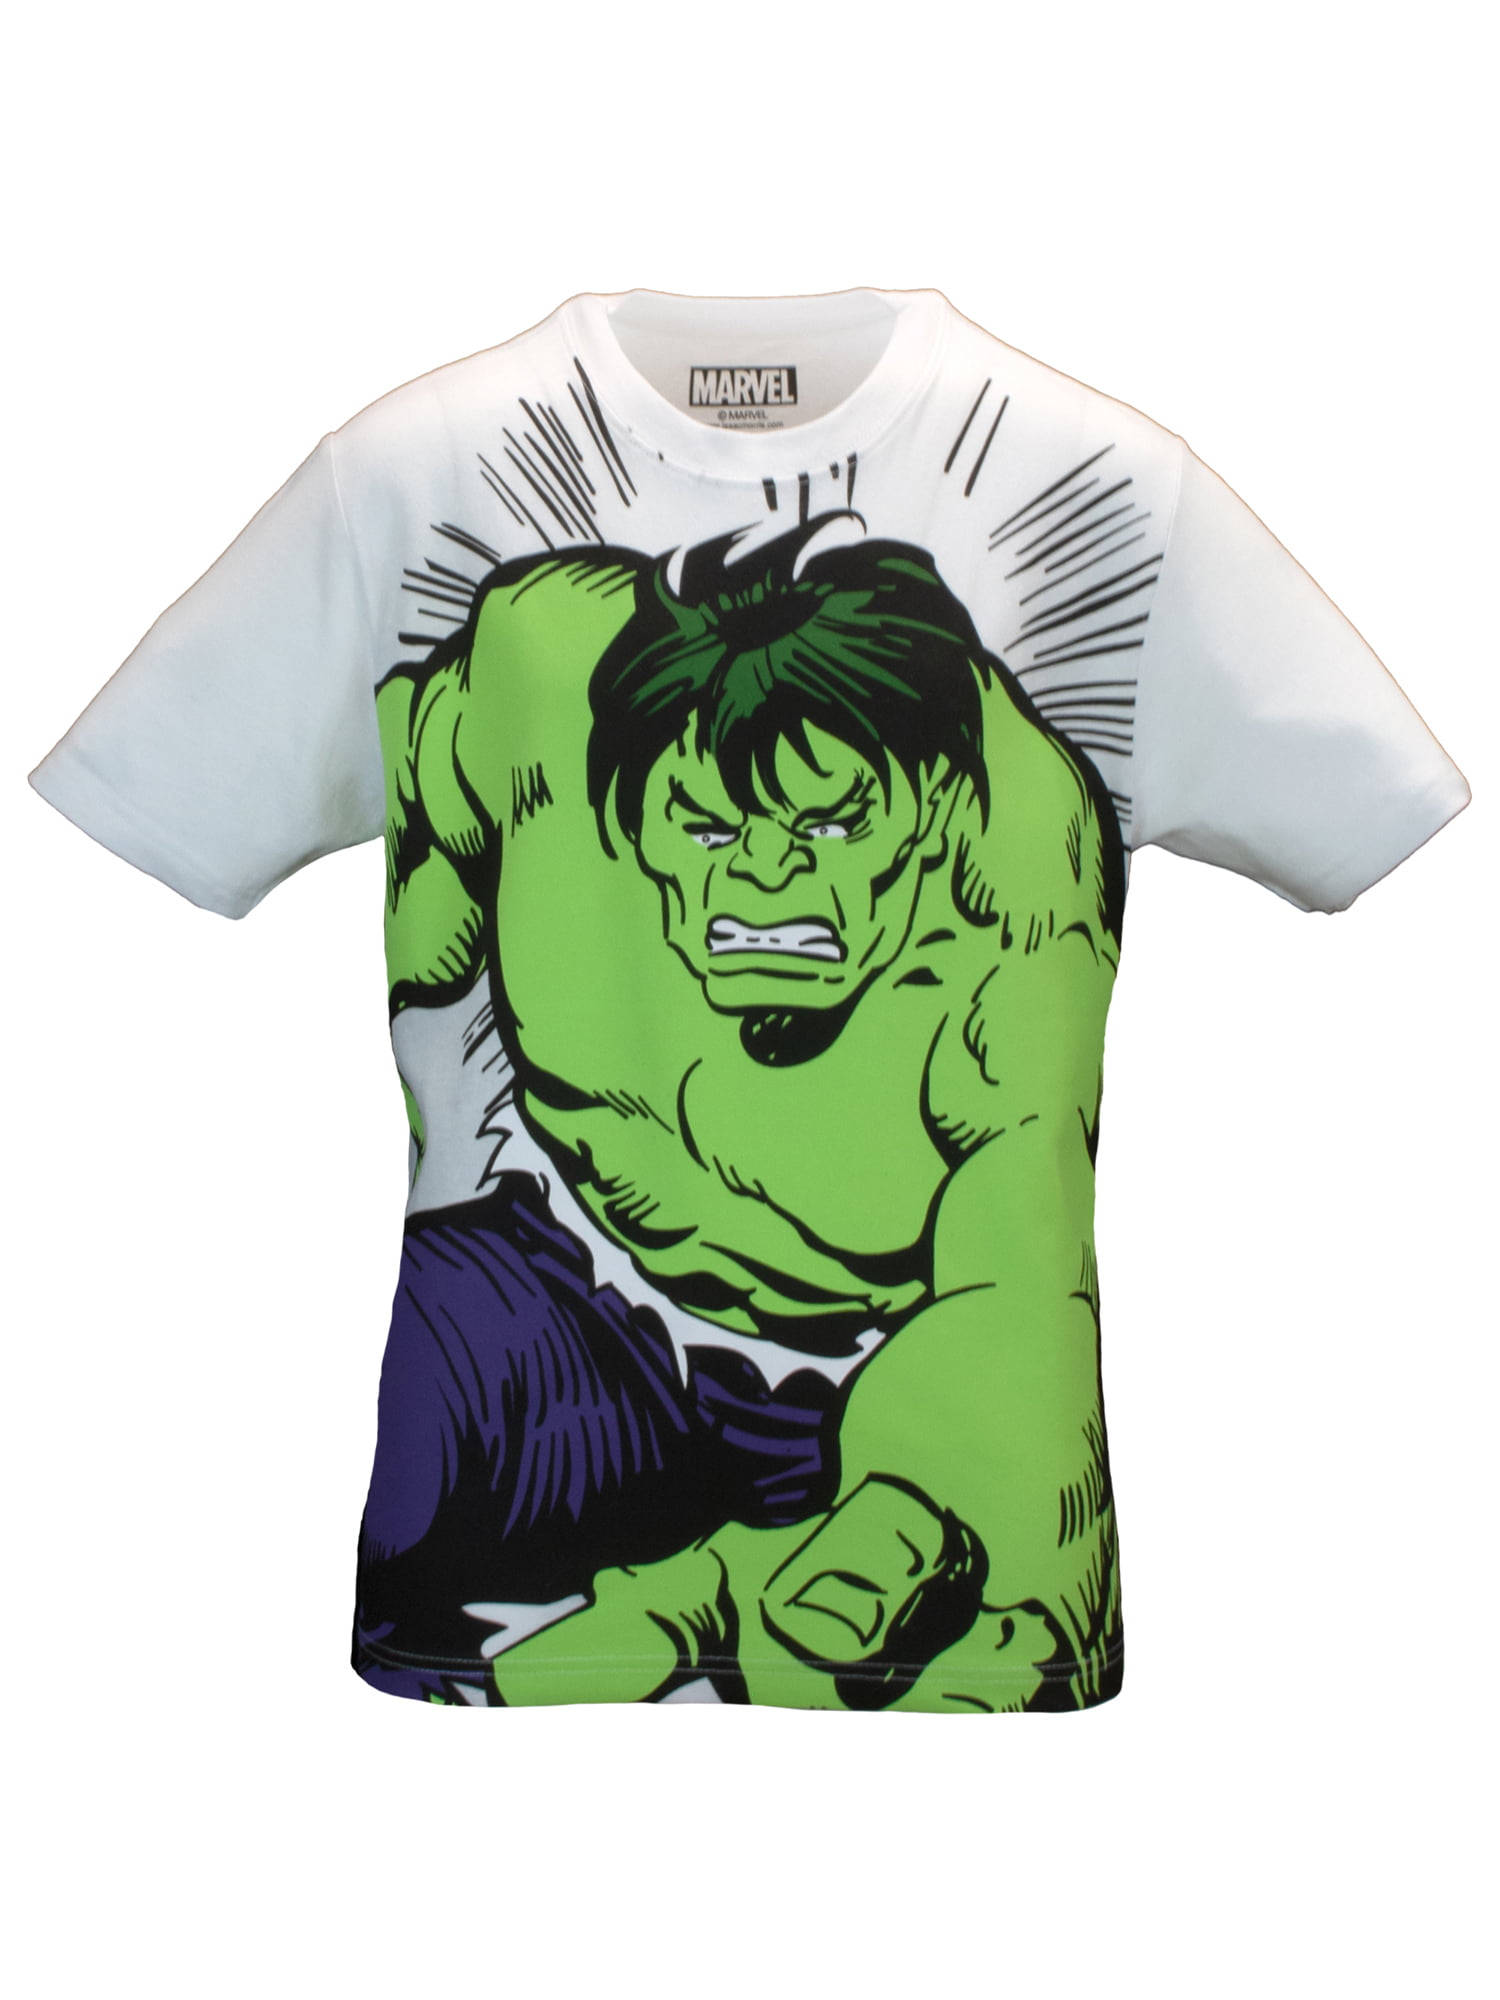 4-Pack, Graphic T-Shirt, Comics The Boys Avengers 4-16 Sizes